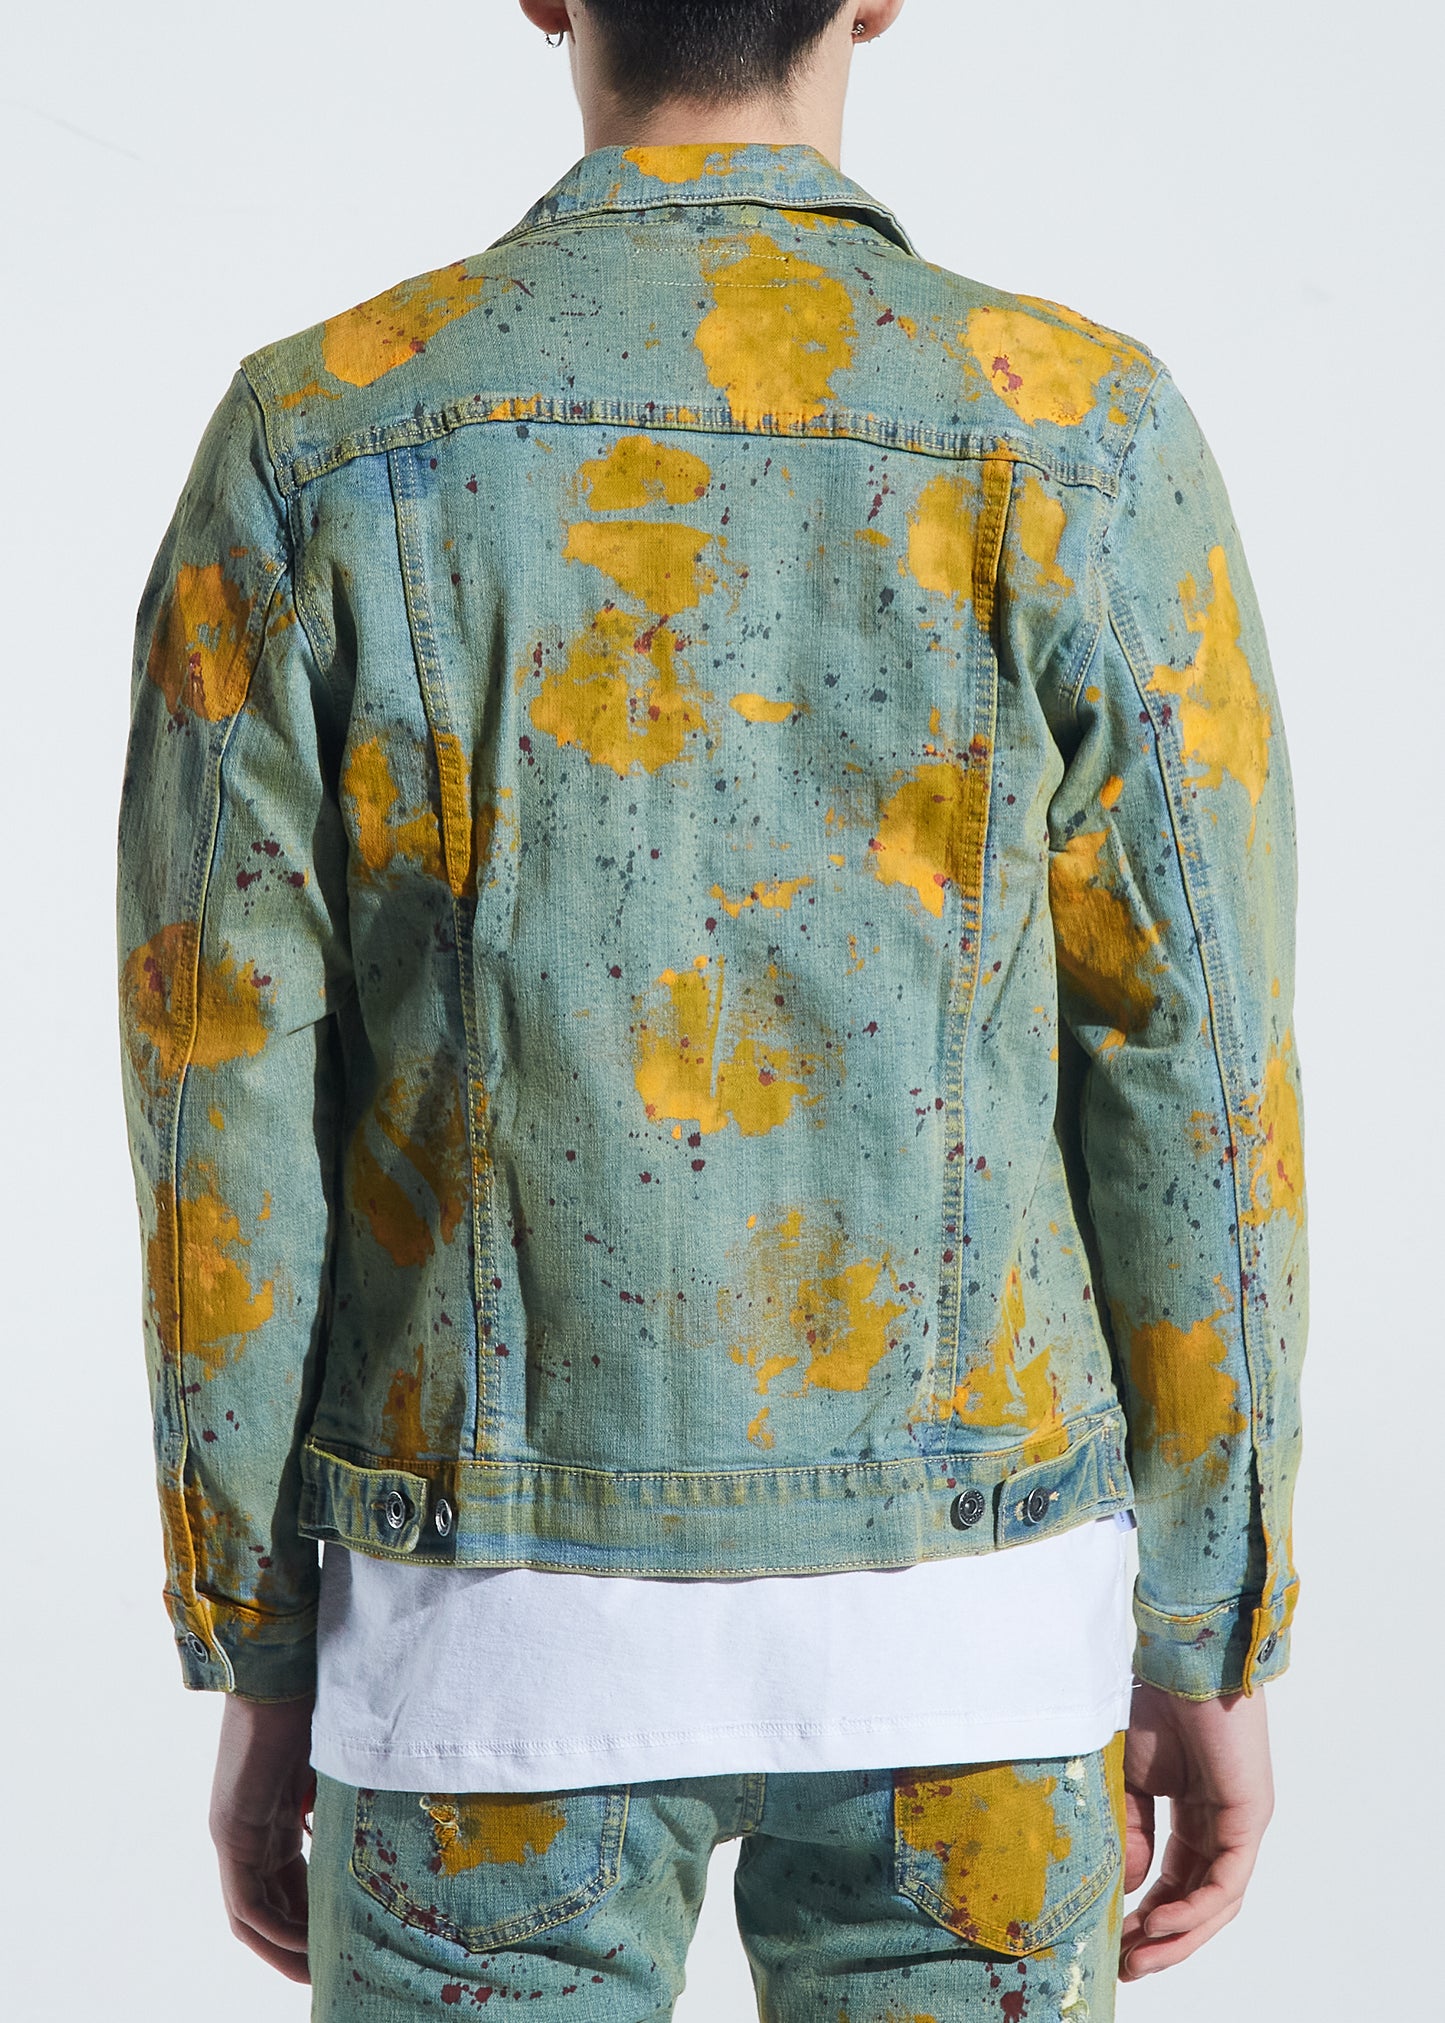 Bering Denim Jacket (Yellow Paint Splatter)